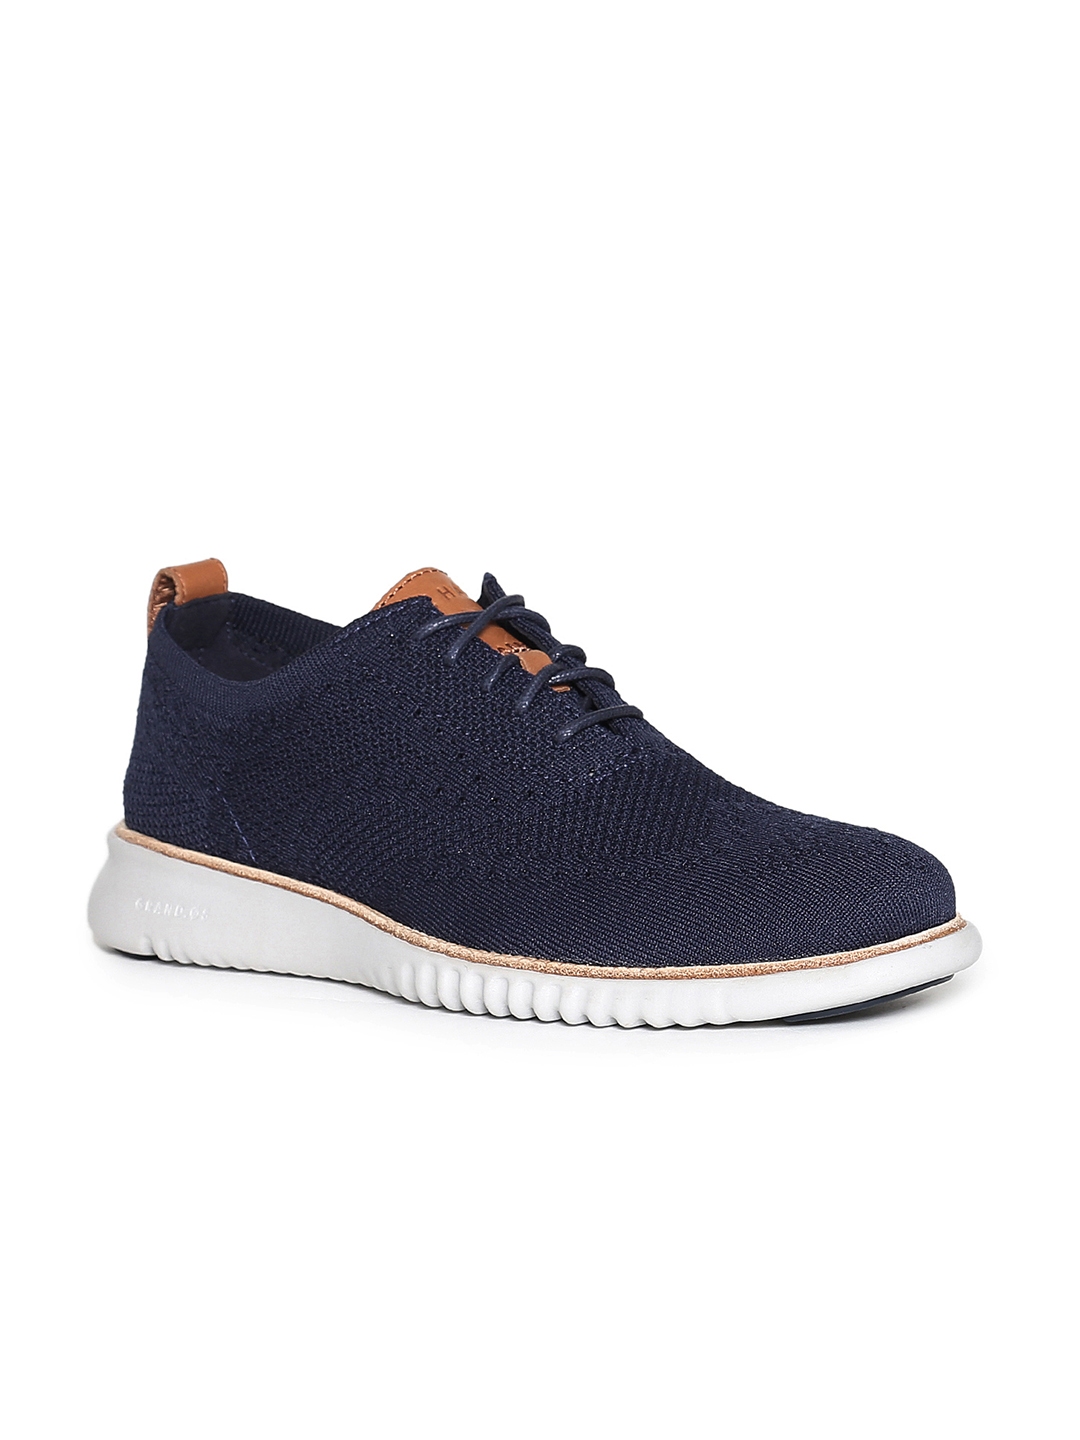 Buy Cole Haan Men Navy Blue Sneakers - Casual Shoes for Men 8199703 ...